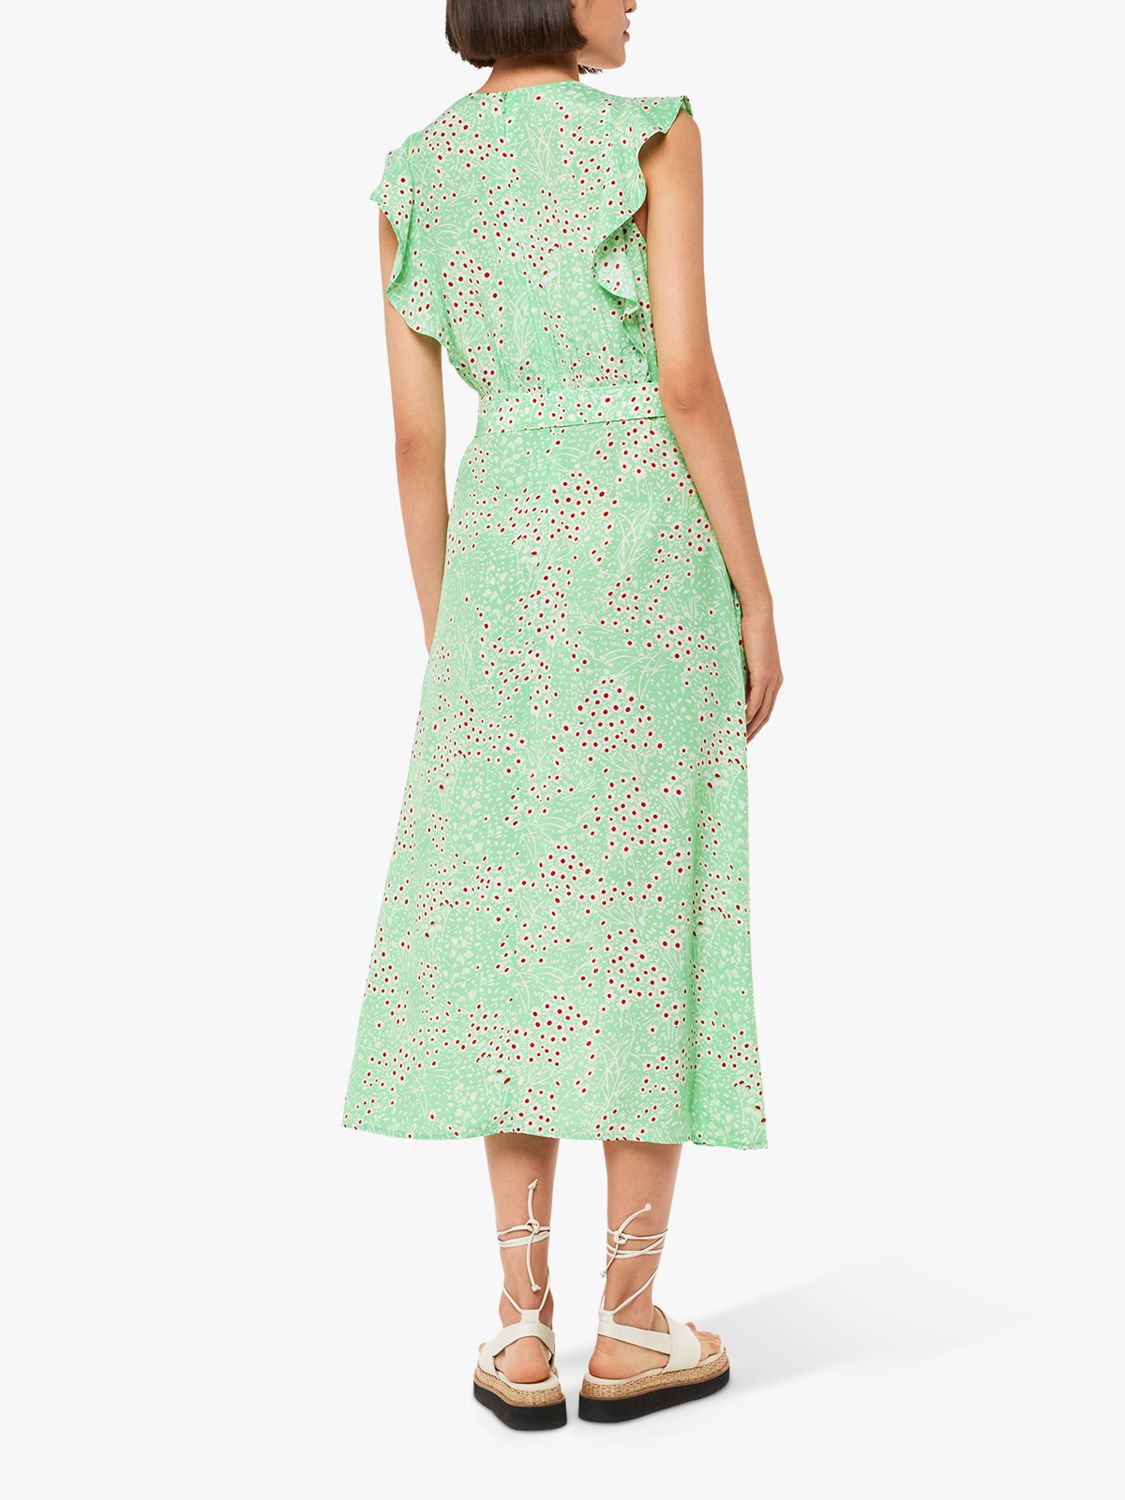 Whistles Sophie Daisy Meadow Print Midi Dress, Green/Multi, 12